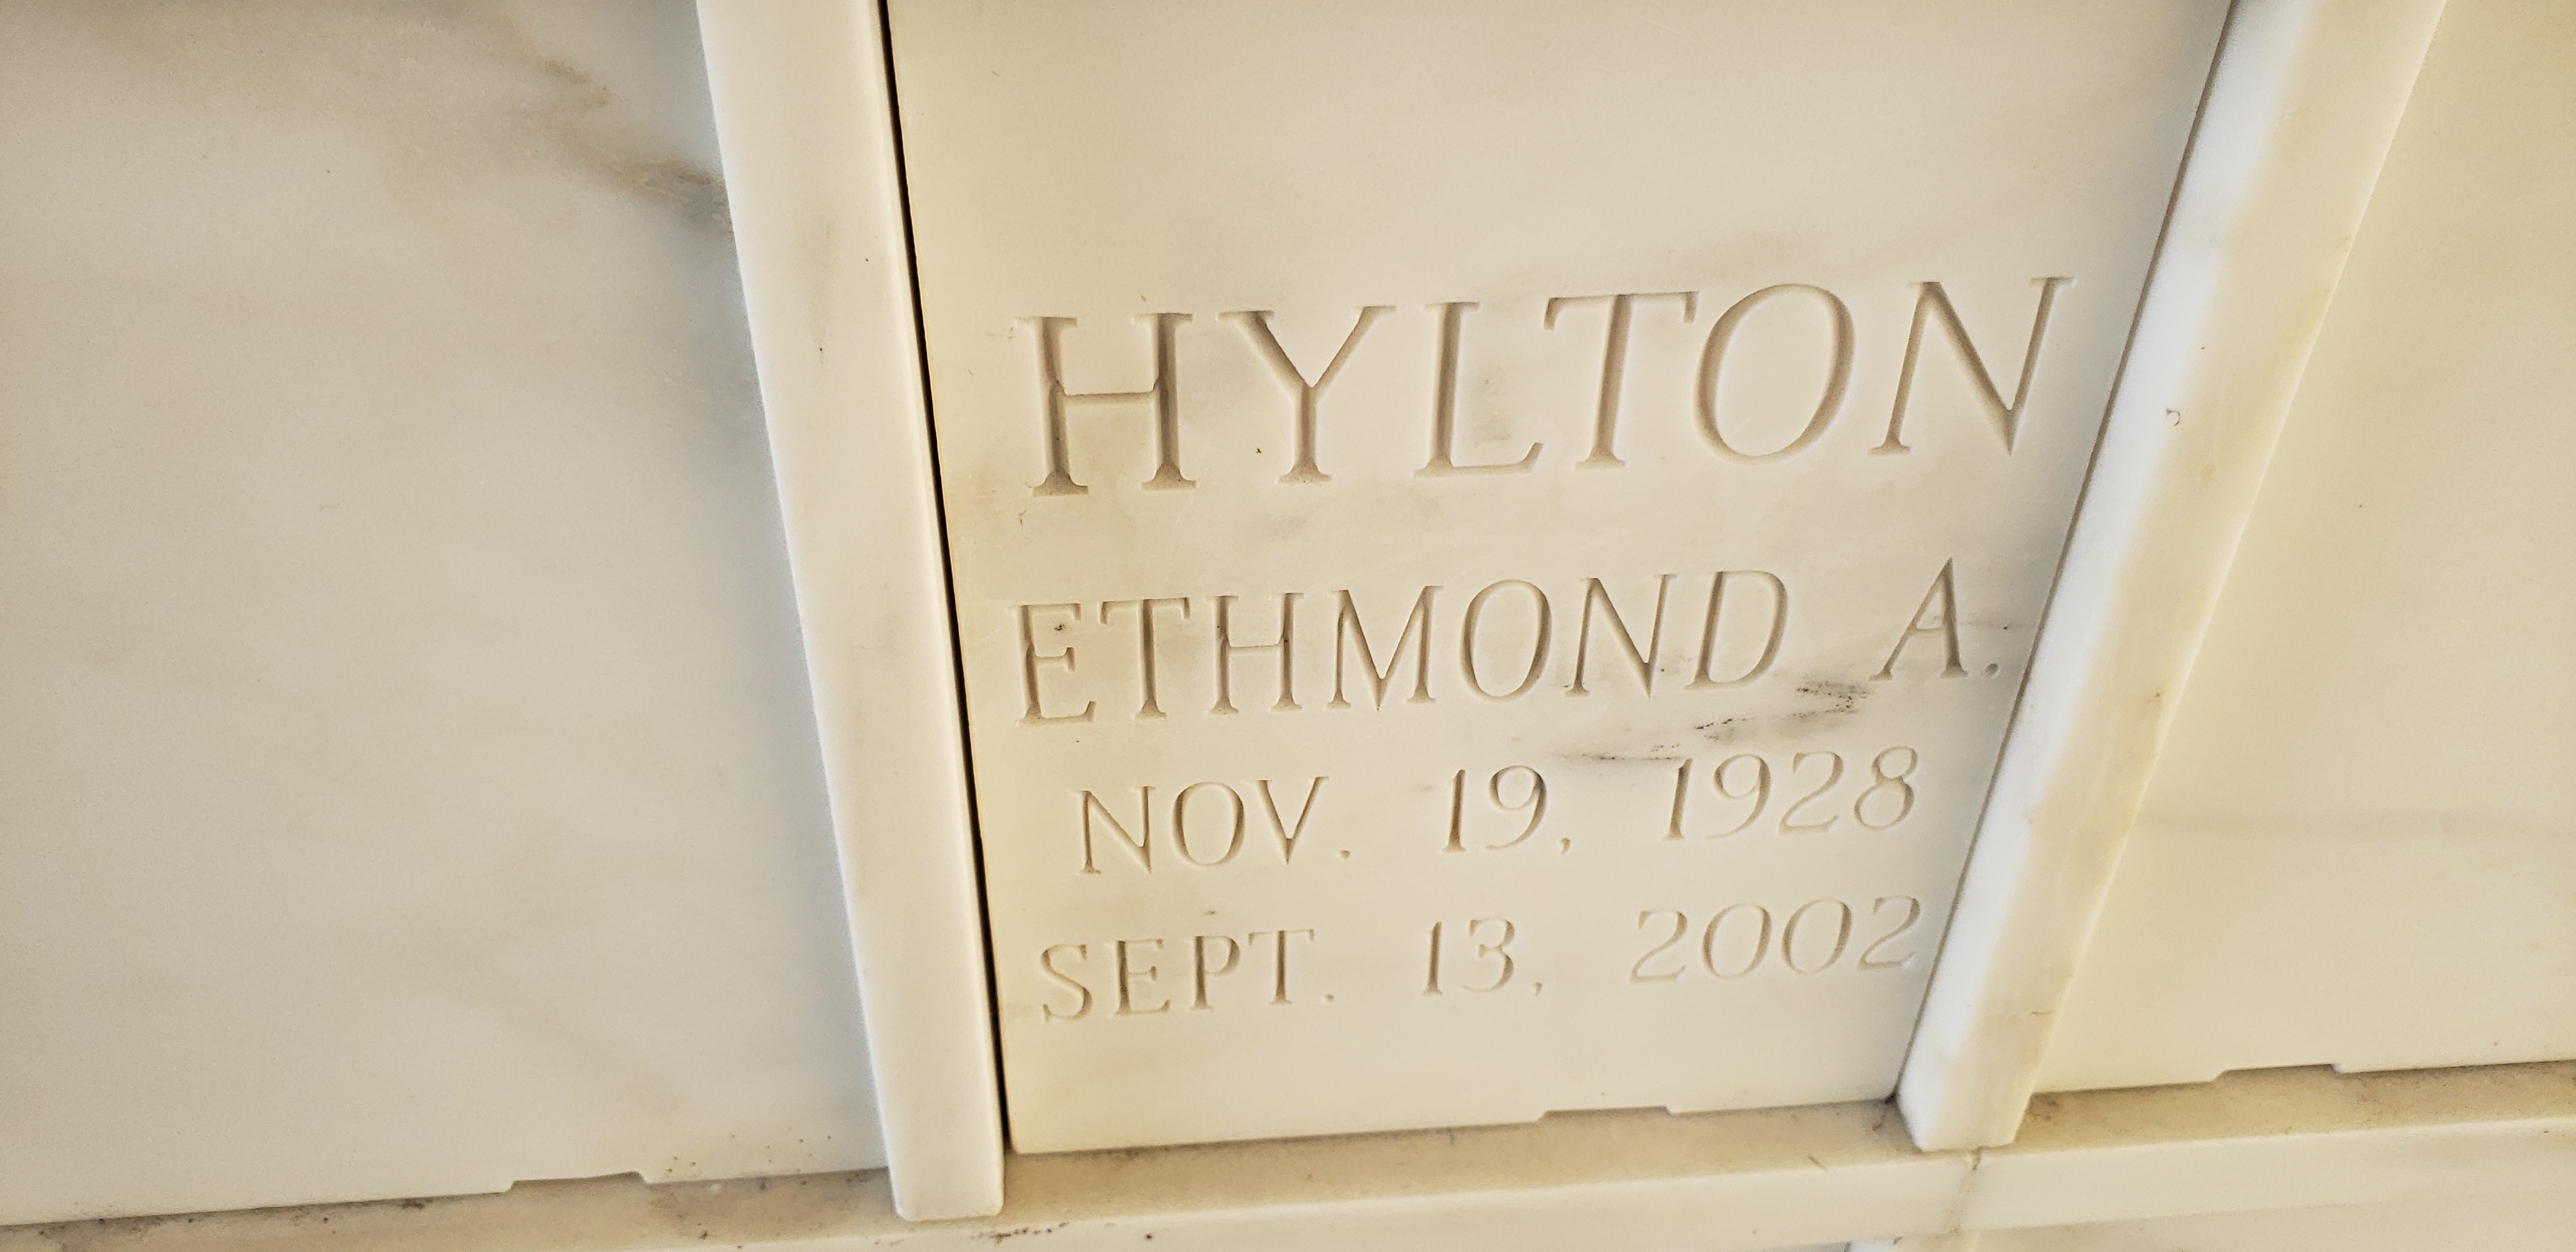 Ethmond A Hylton